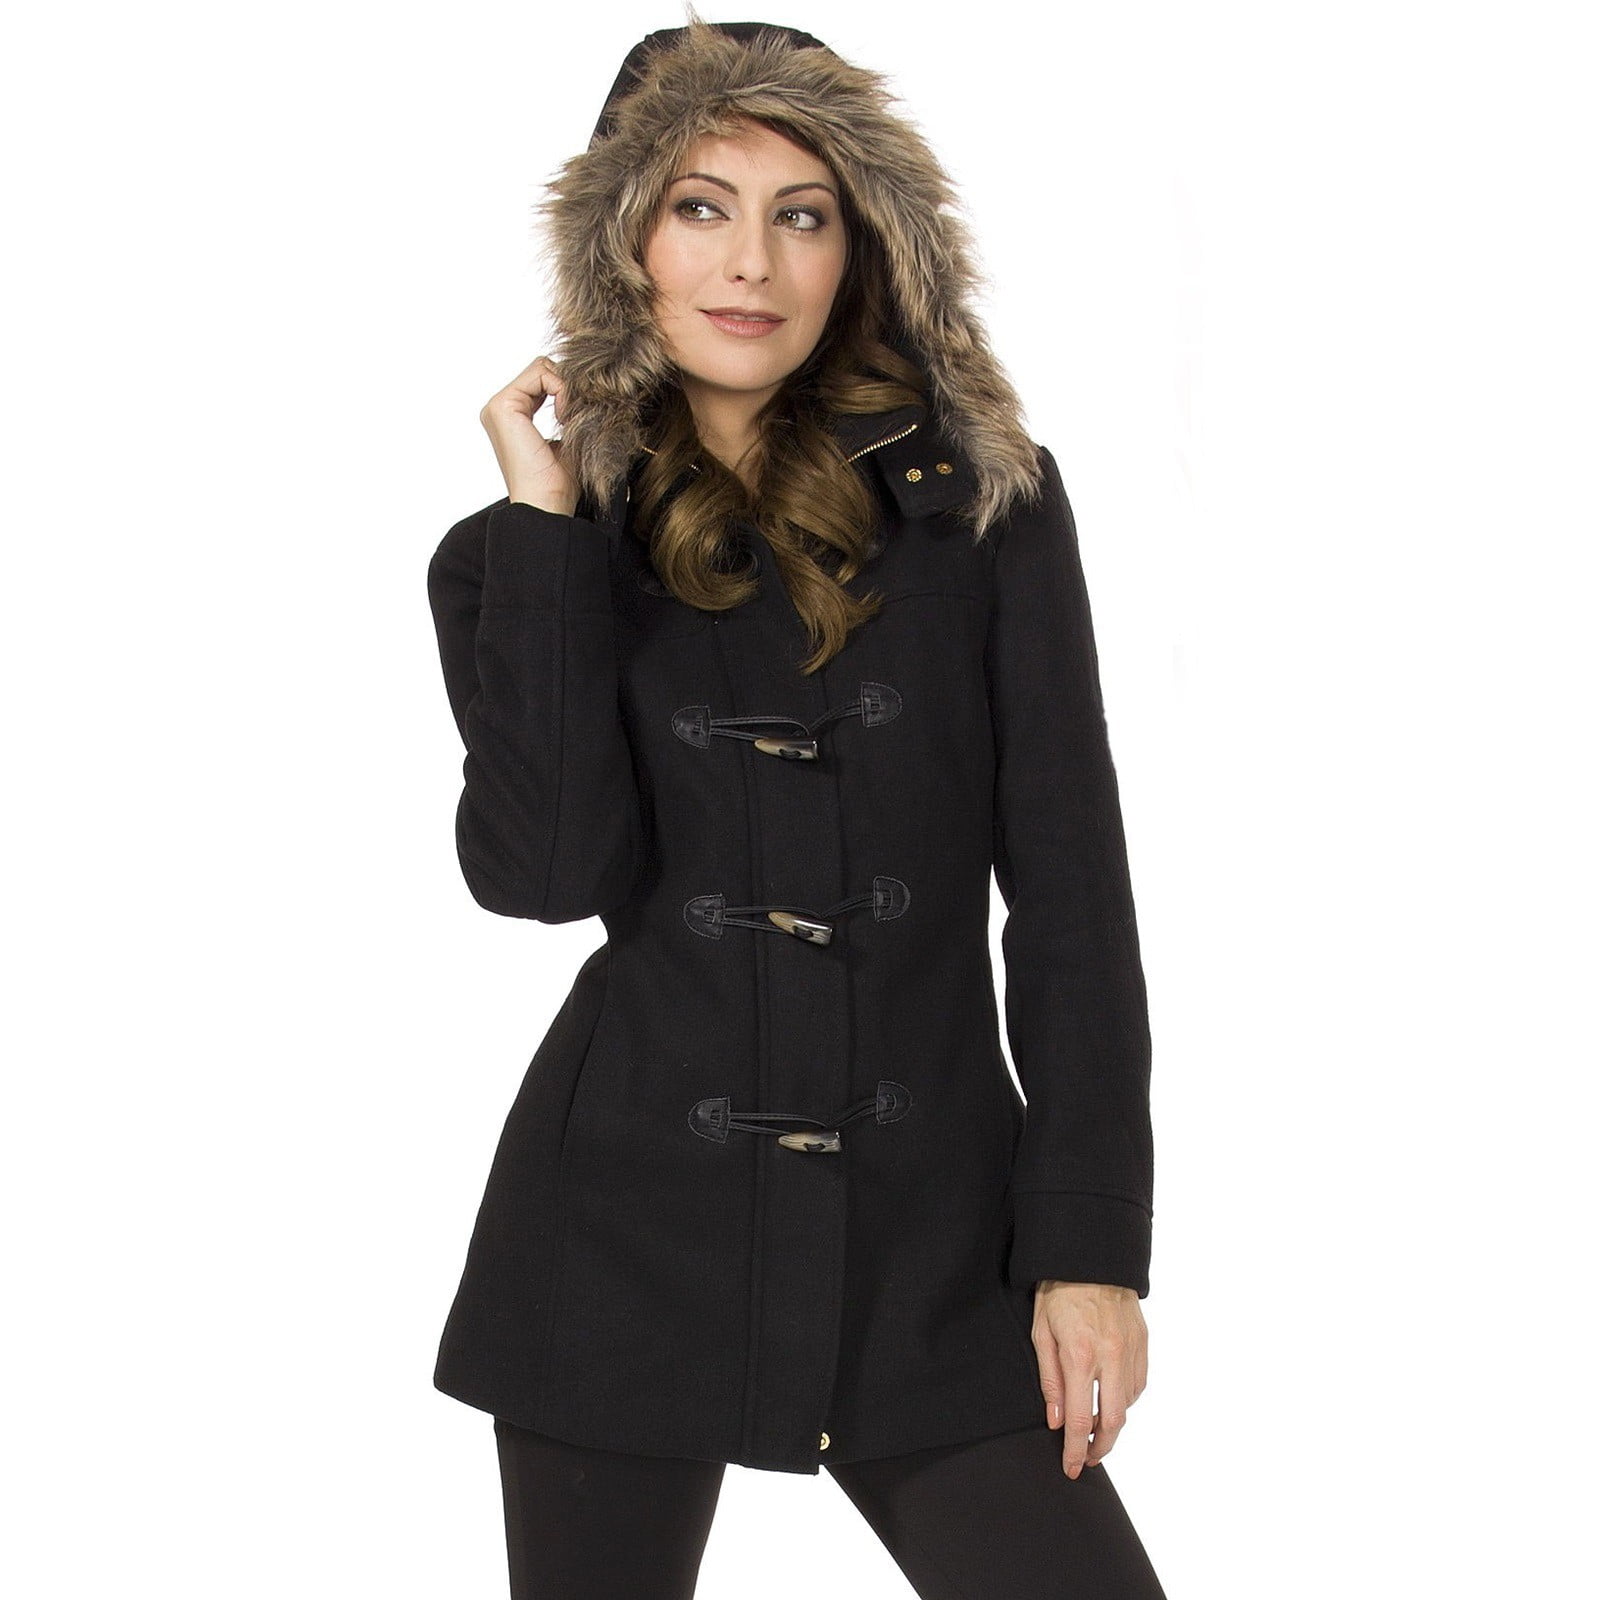 Kid's Coats Winter Black Jacket Faux Fur Parka Casual Hooded Warm Trench Outwear